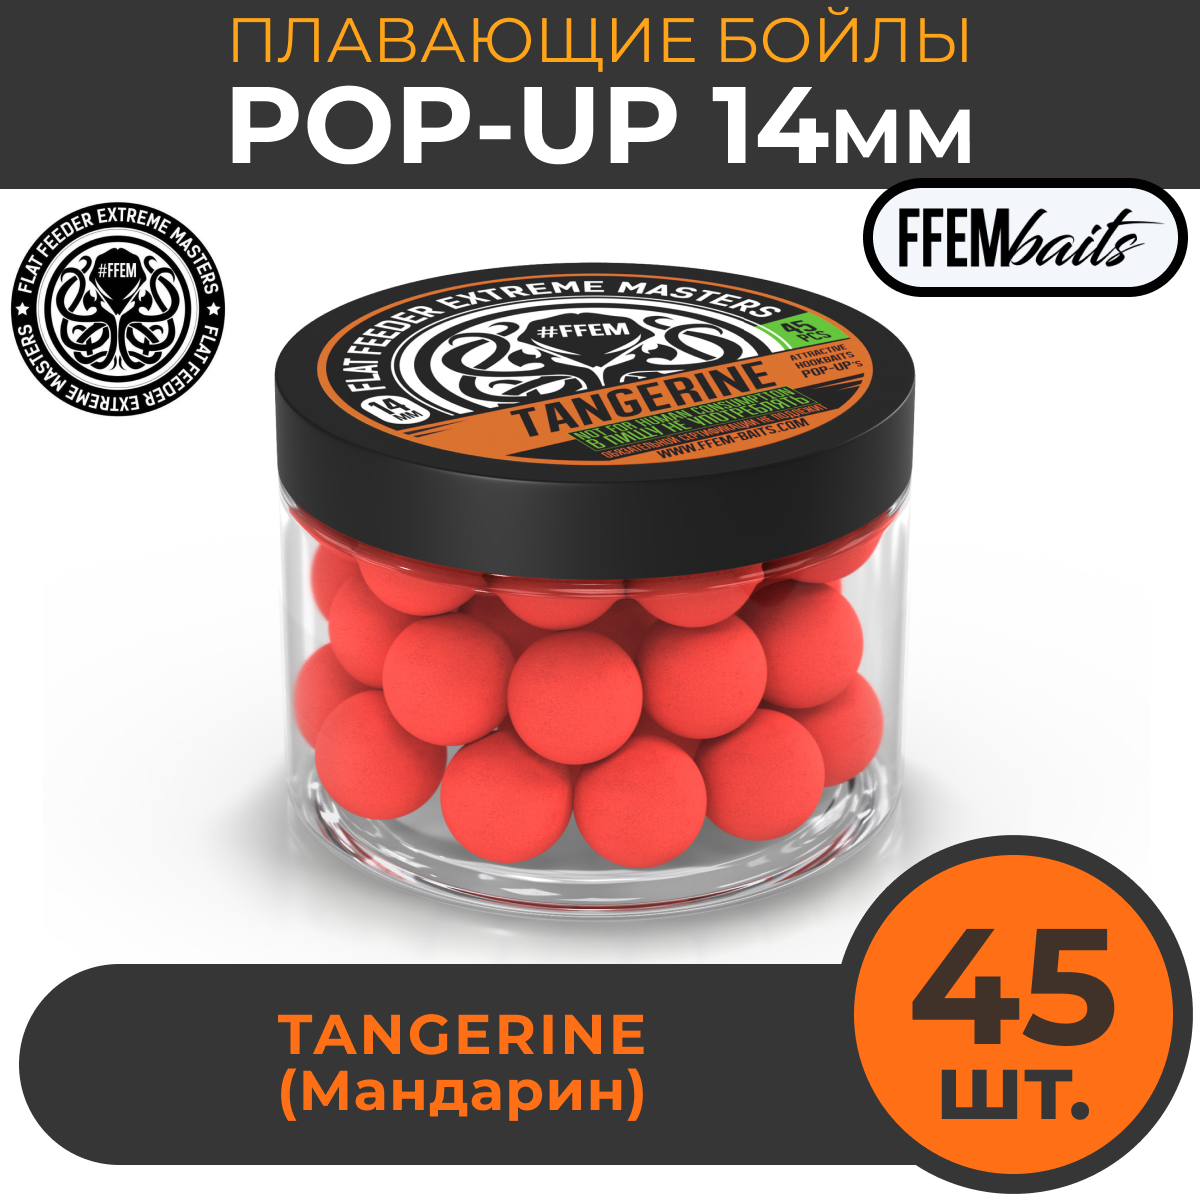 Плавающие бойлы POP-UP 14 мм Tangerine Мандарин, 150мл (45шт), супер аттрактивные плавающие насадочные бойлы поп-ап / FFEM Поп ап 14мм